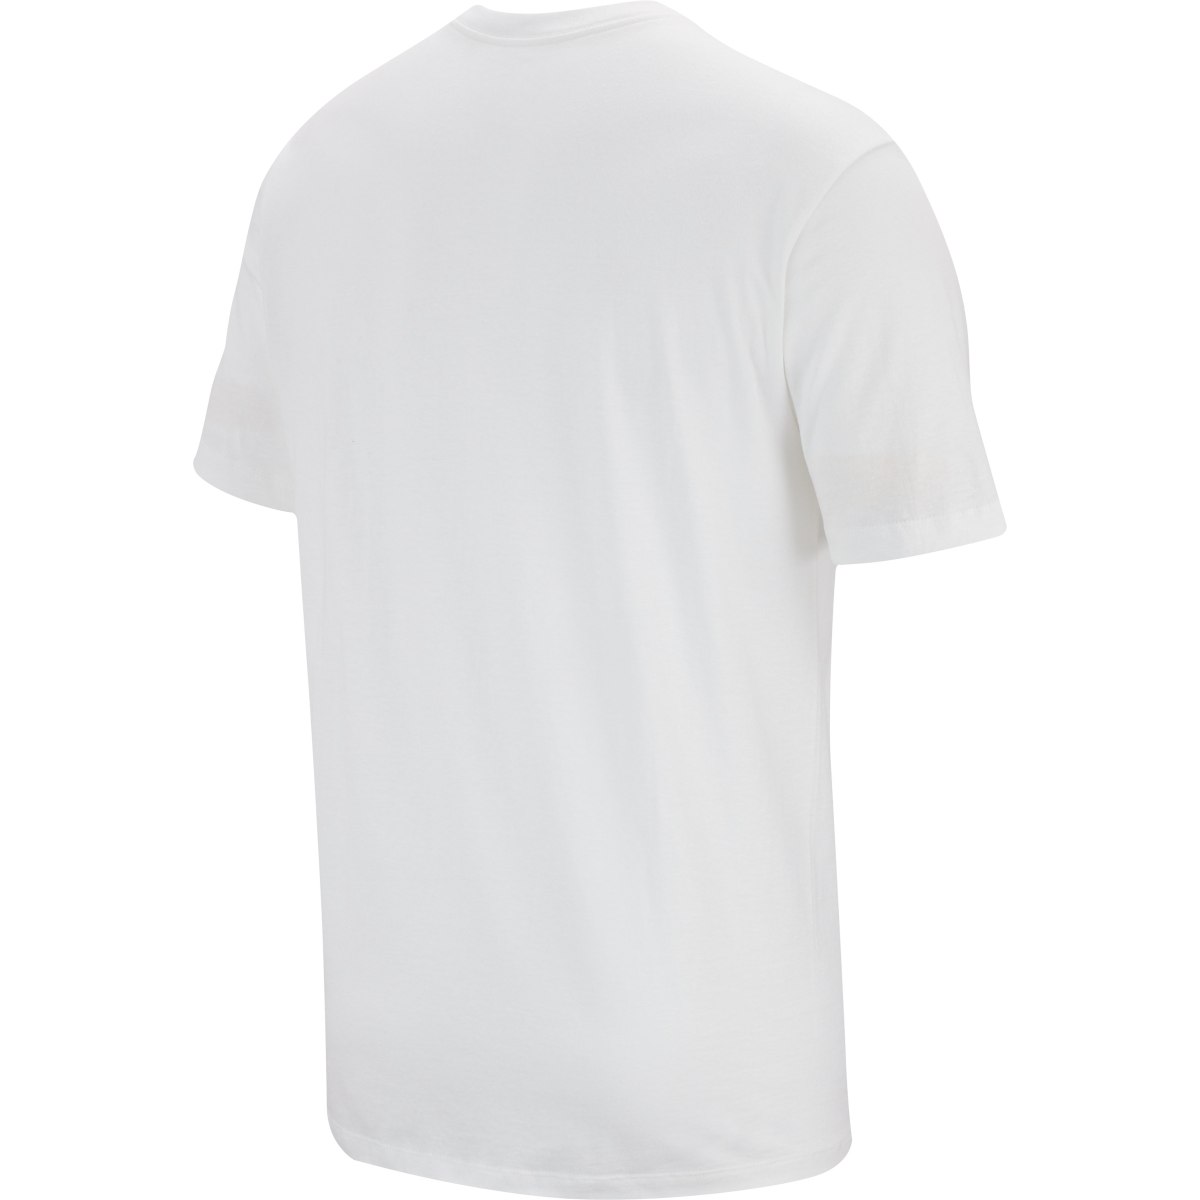 Nike T-Shirt Homme - Sportswear Club - white/black AR4997-101 - BIKE24